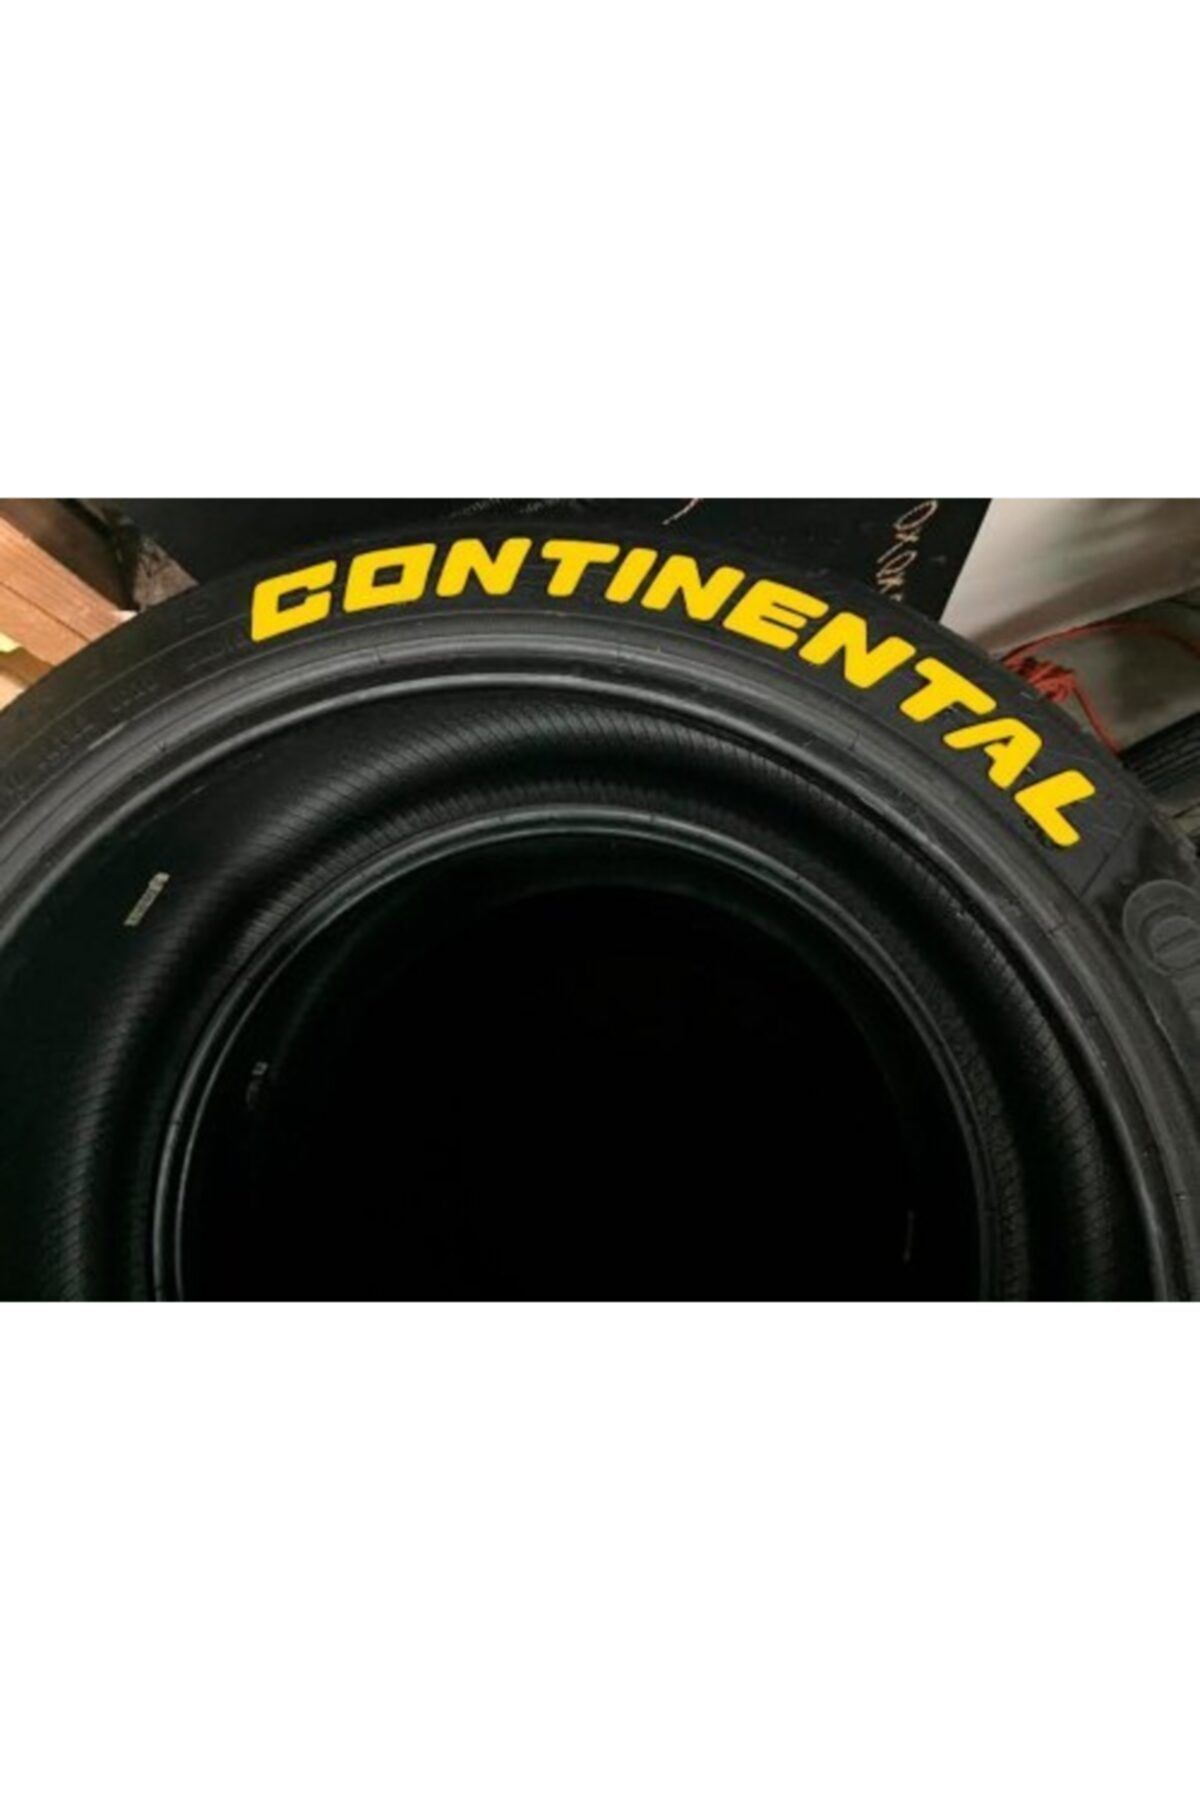 Continental Lastik Yazısı Sarı 4 Adet 1.sınıf Kalite Solmaz Araç Motorsiklet Lastik Stiker